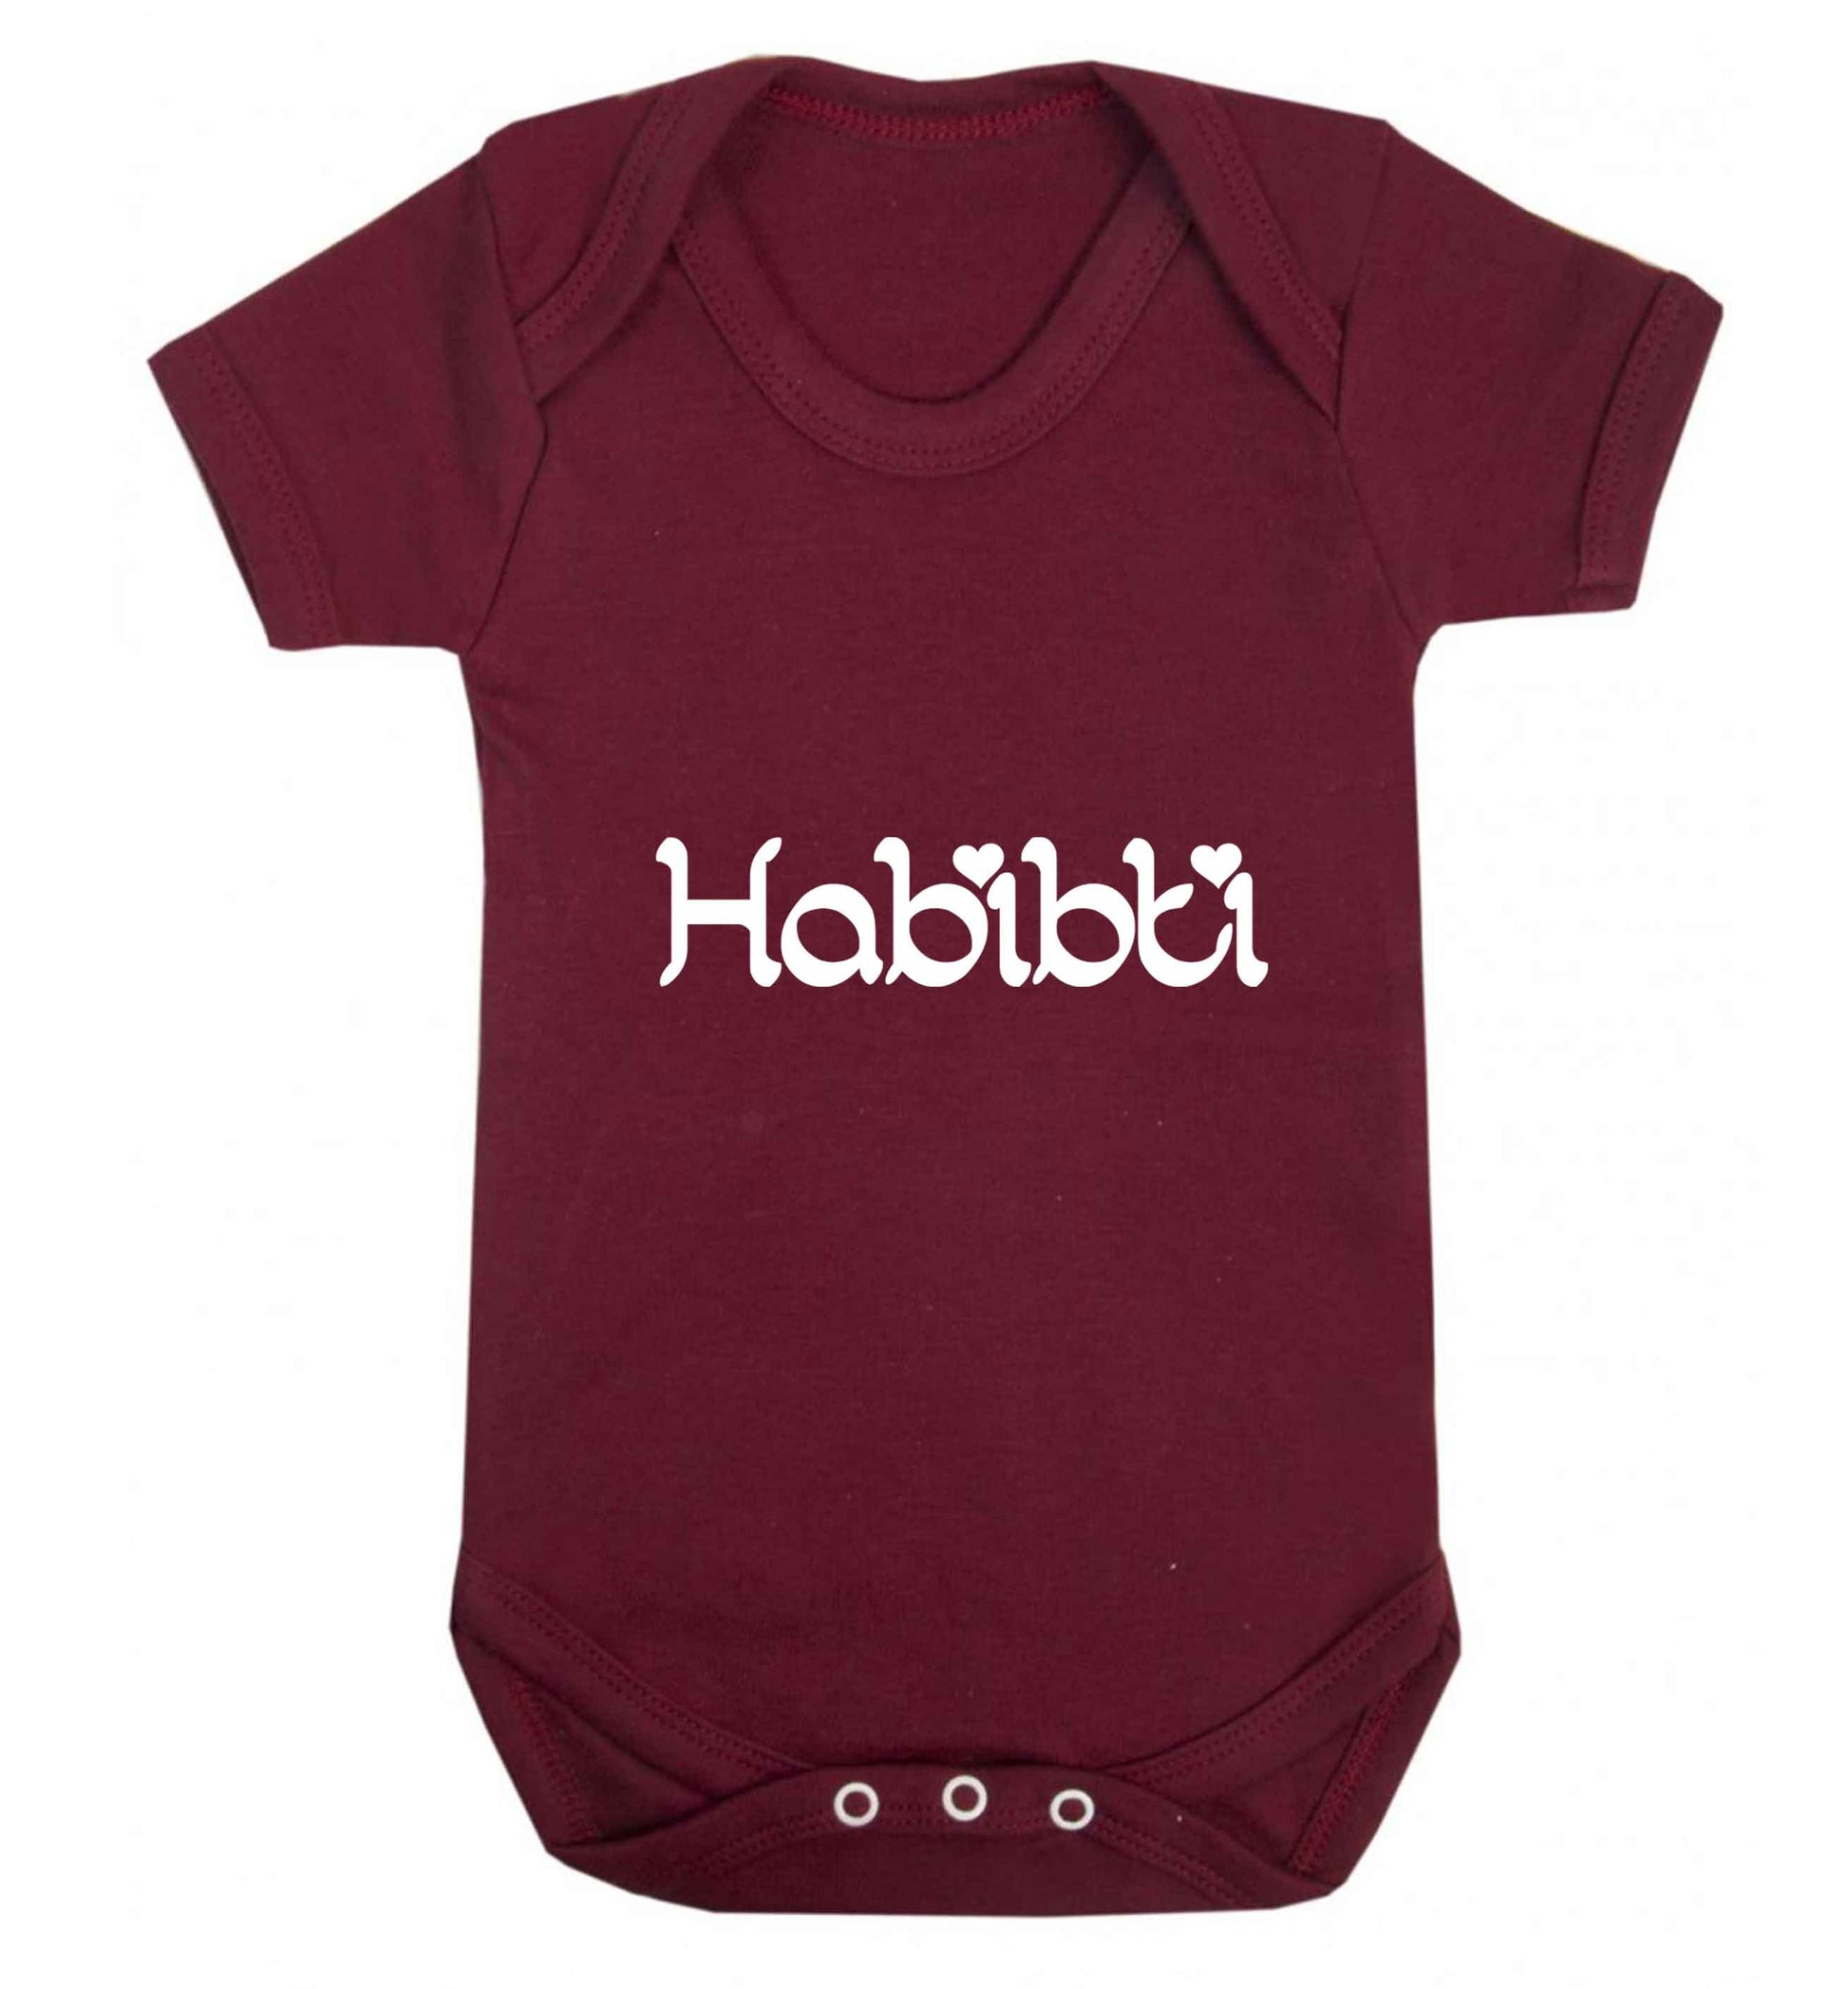 Habibiti baby vest maroon 18-24 months